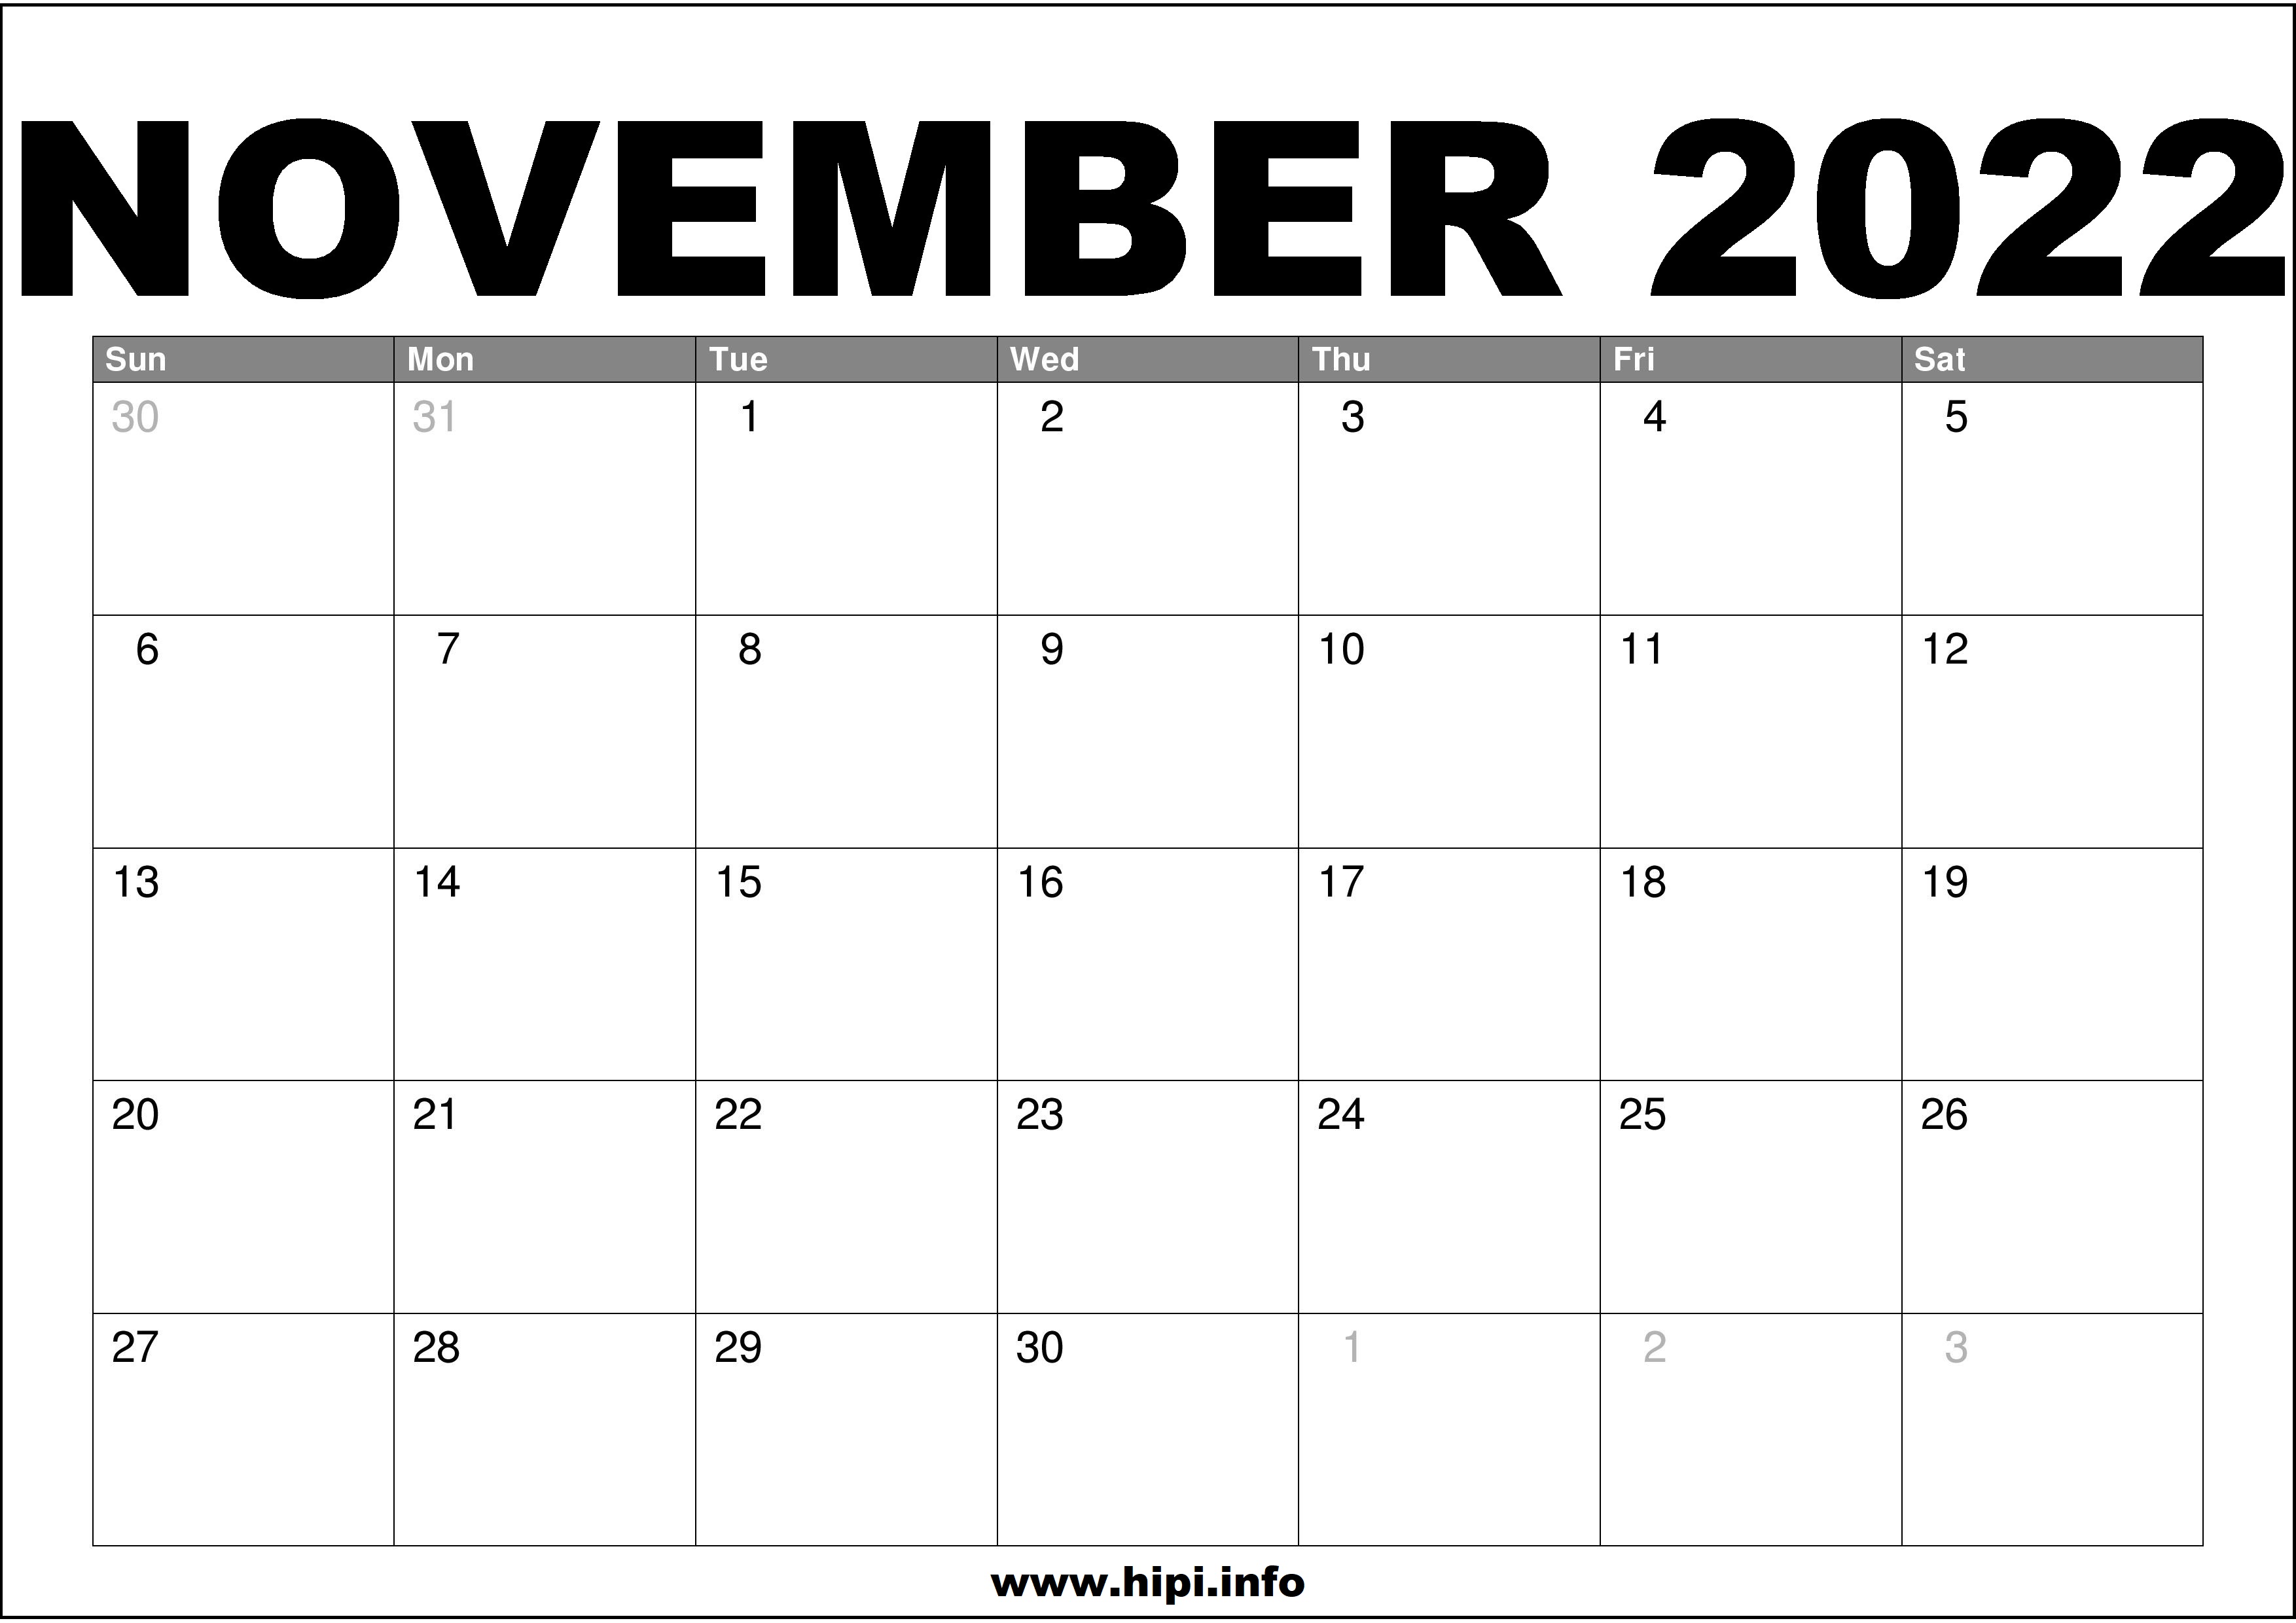 November Calendar Template 2022 November 2022 Calendar Printable Free - Hipi.info | Calendars Printable Free